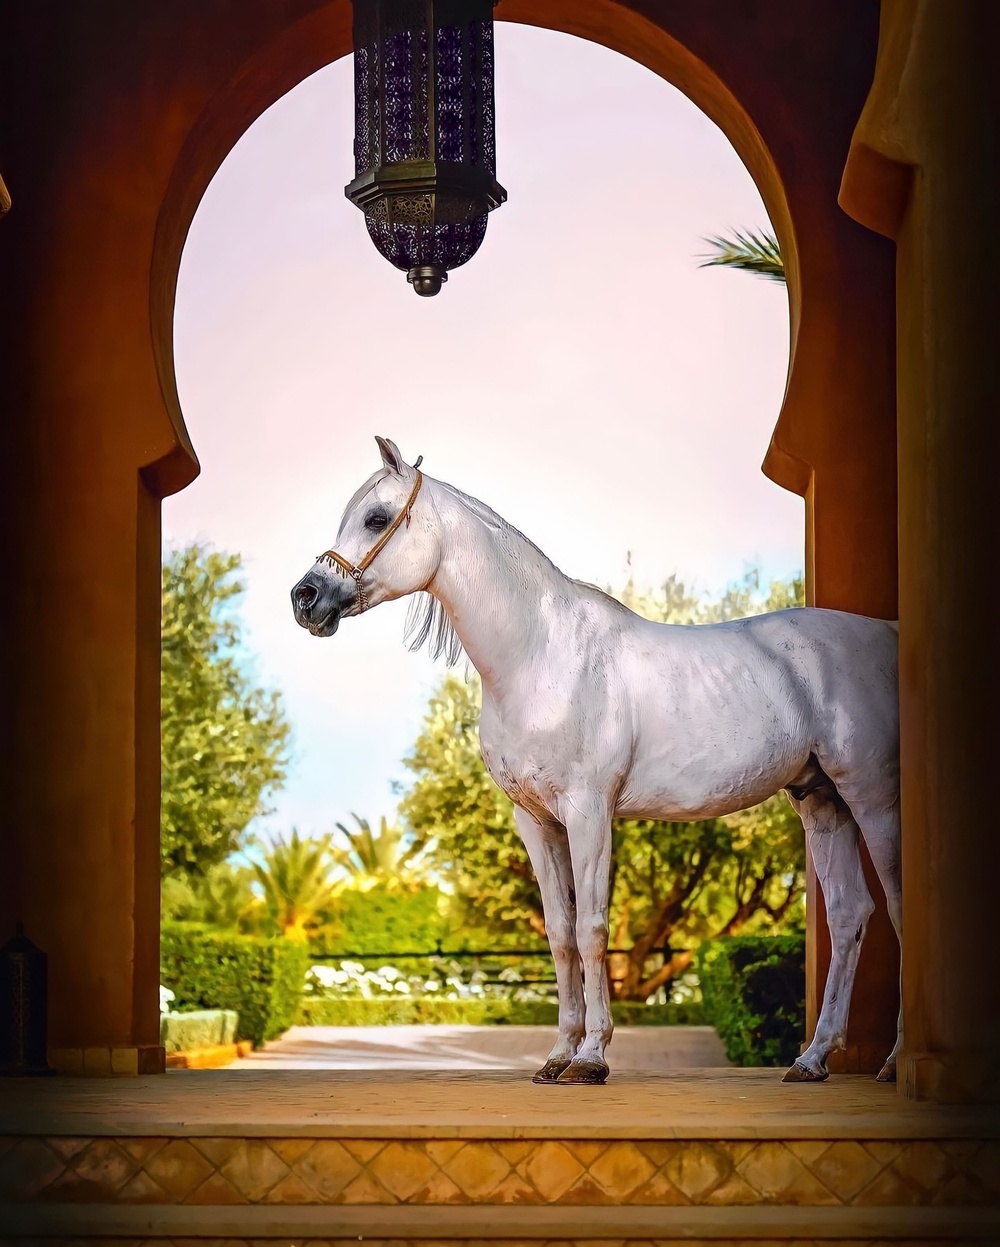 Beauty Gonzalez shares photos of Arabian stallions at a hotel